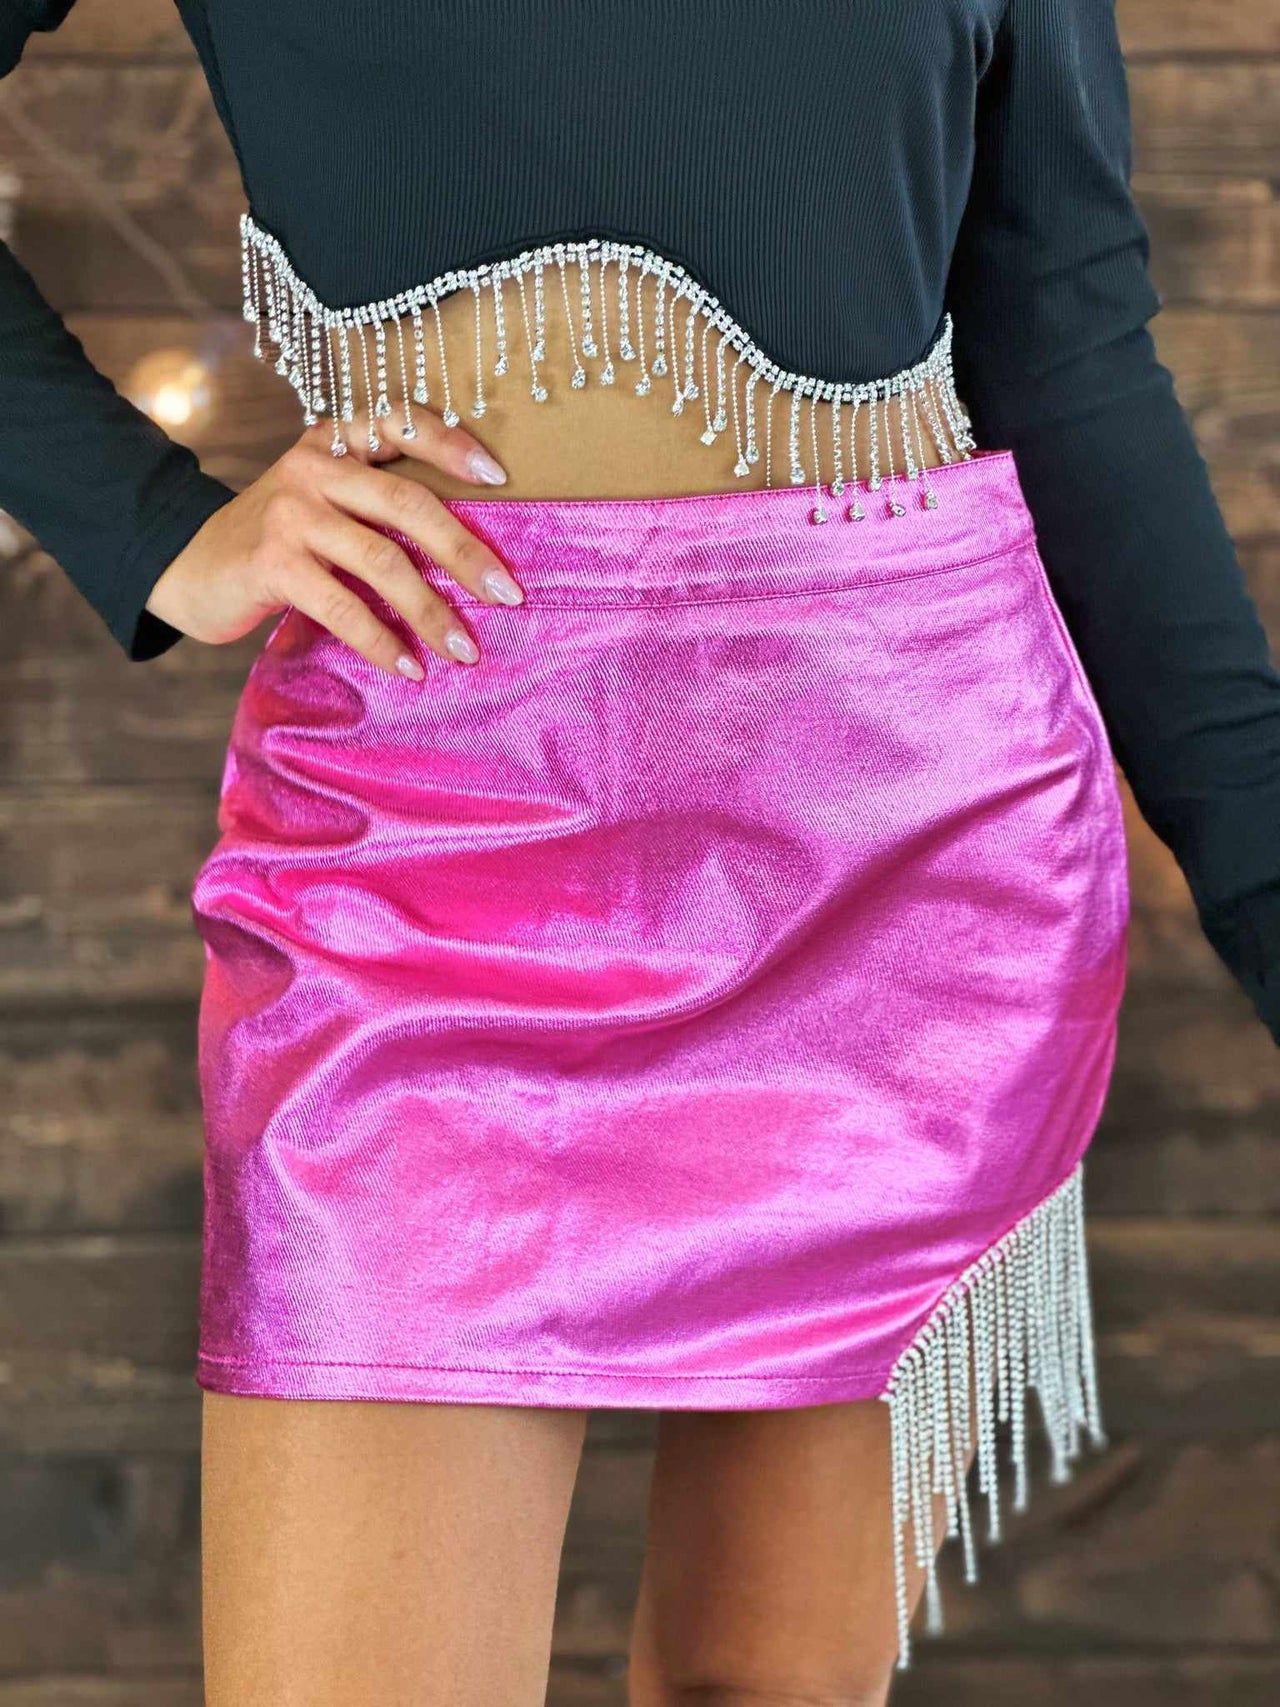 Metallic pink mini skirt with rhinestone fringe